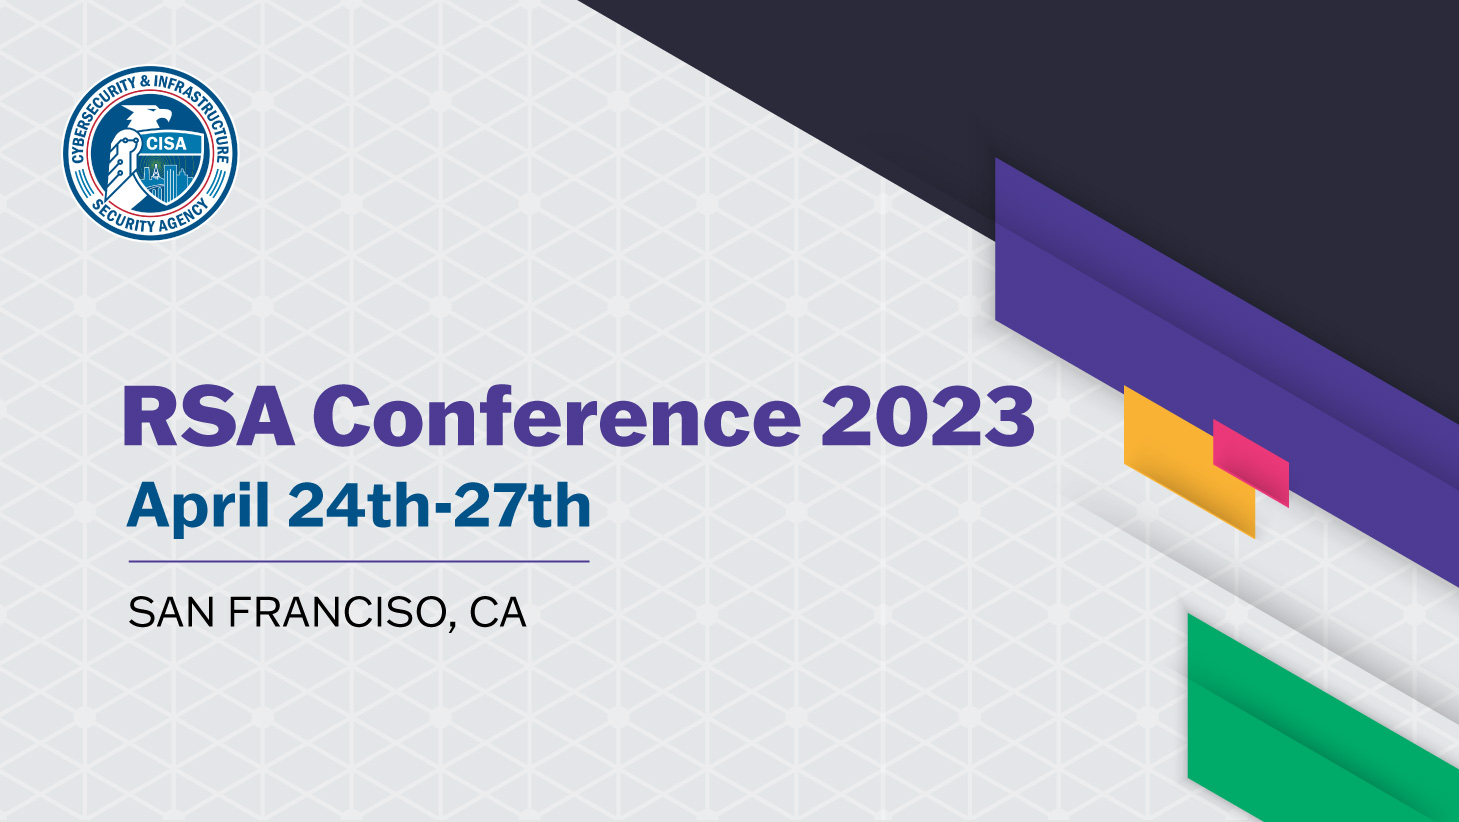 RSA Conference 2023 CISA